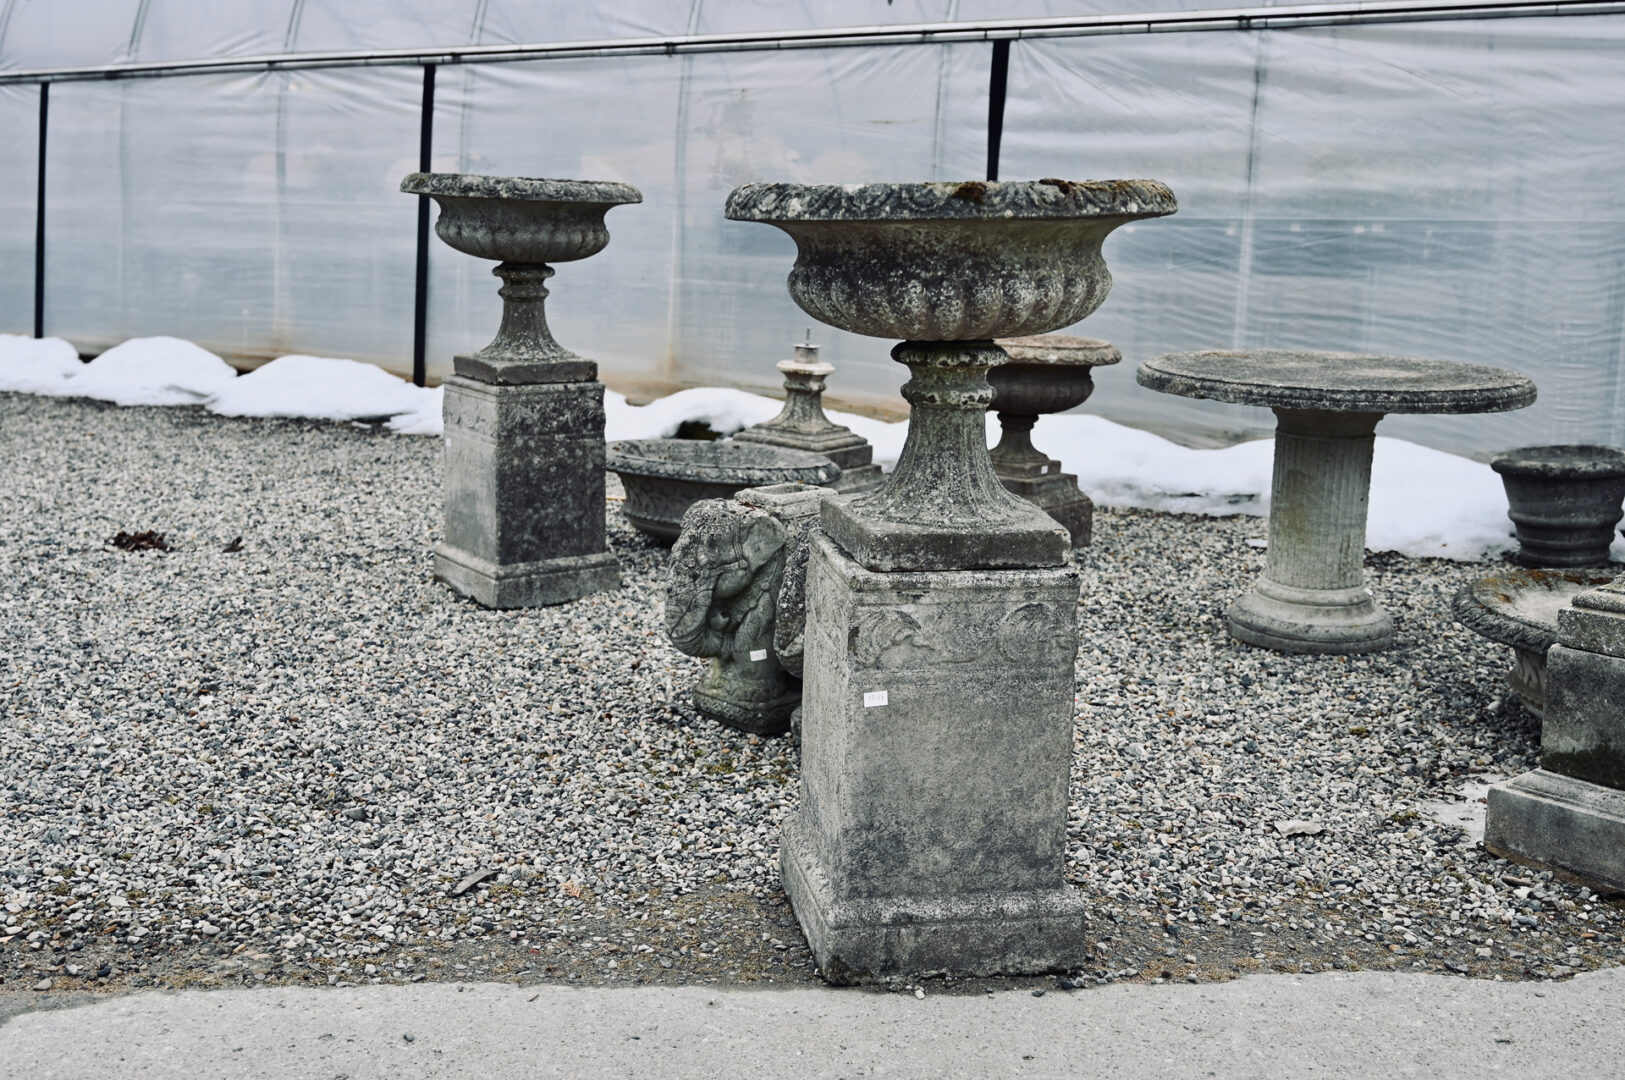 Pair of Urns on Pedestal